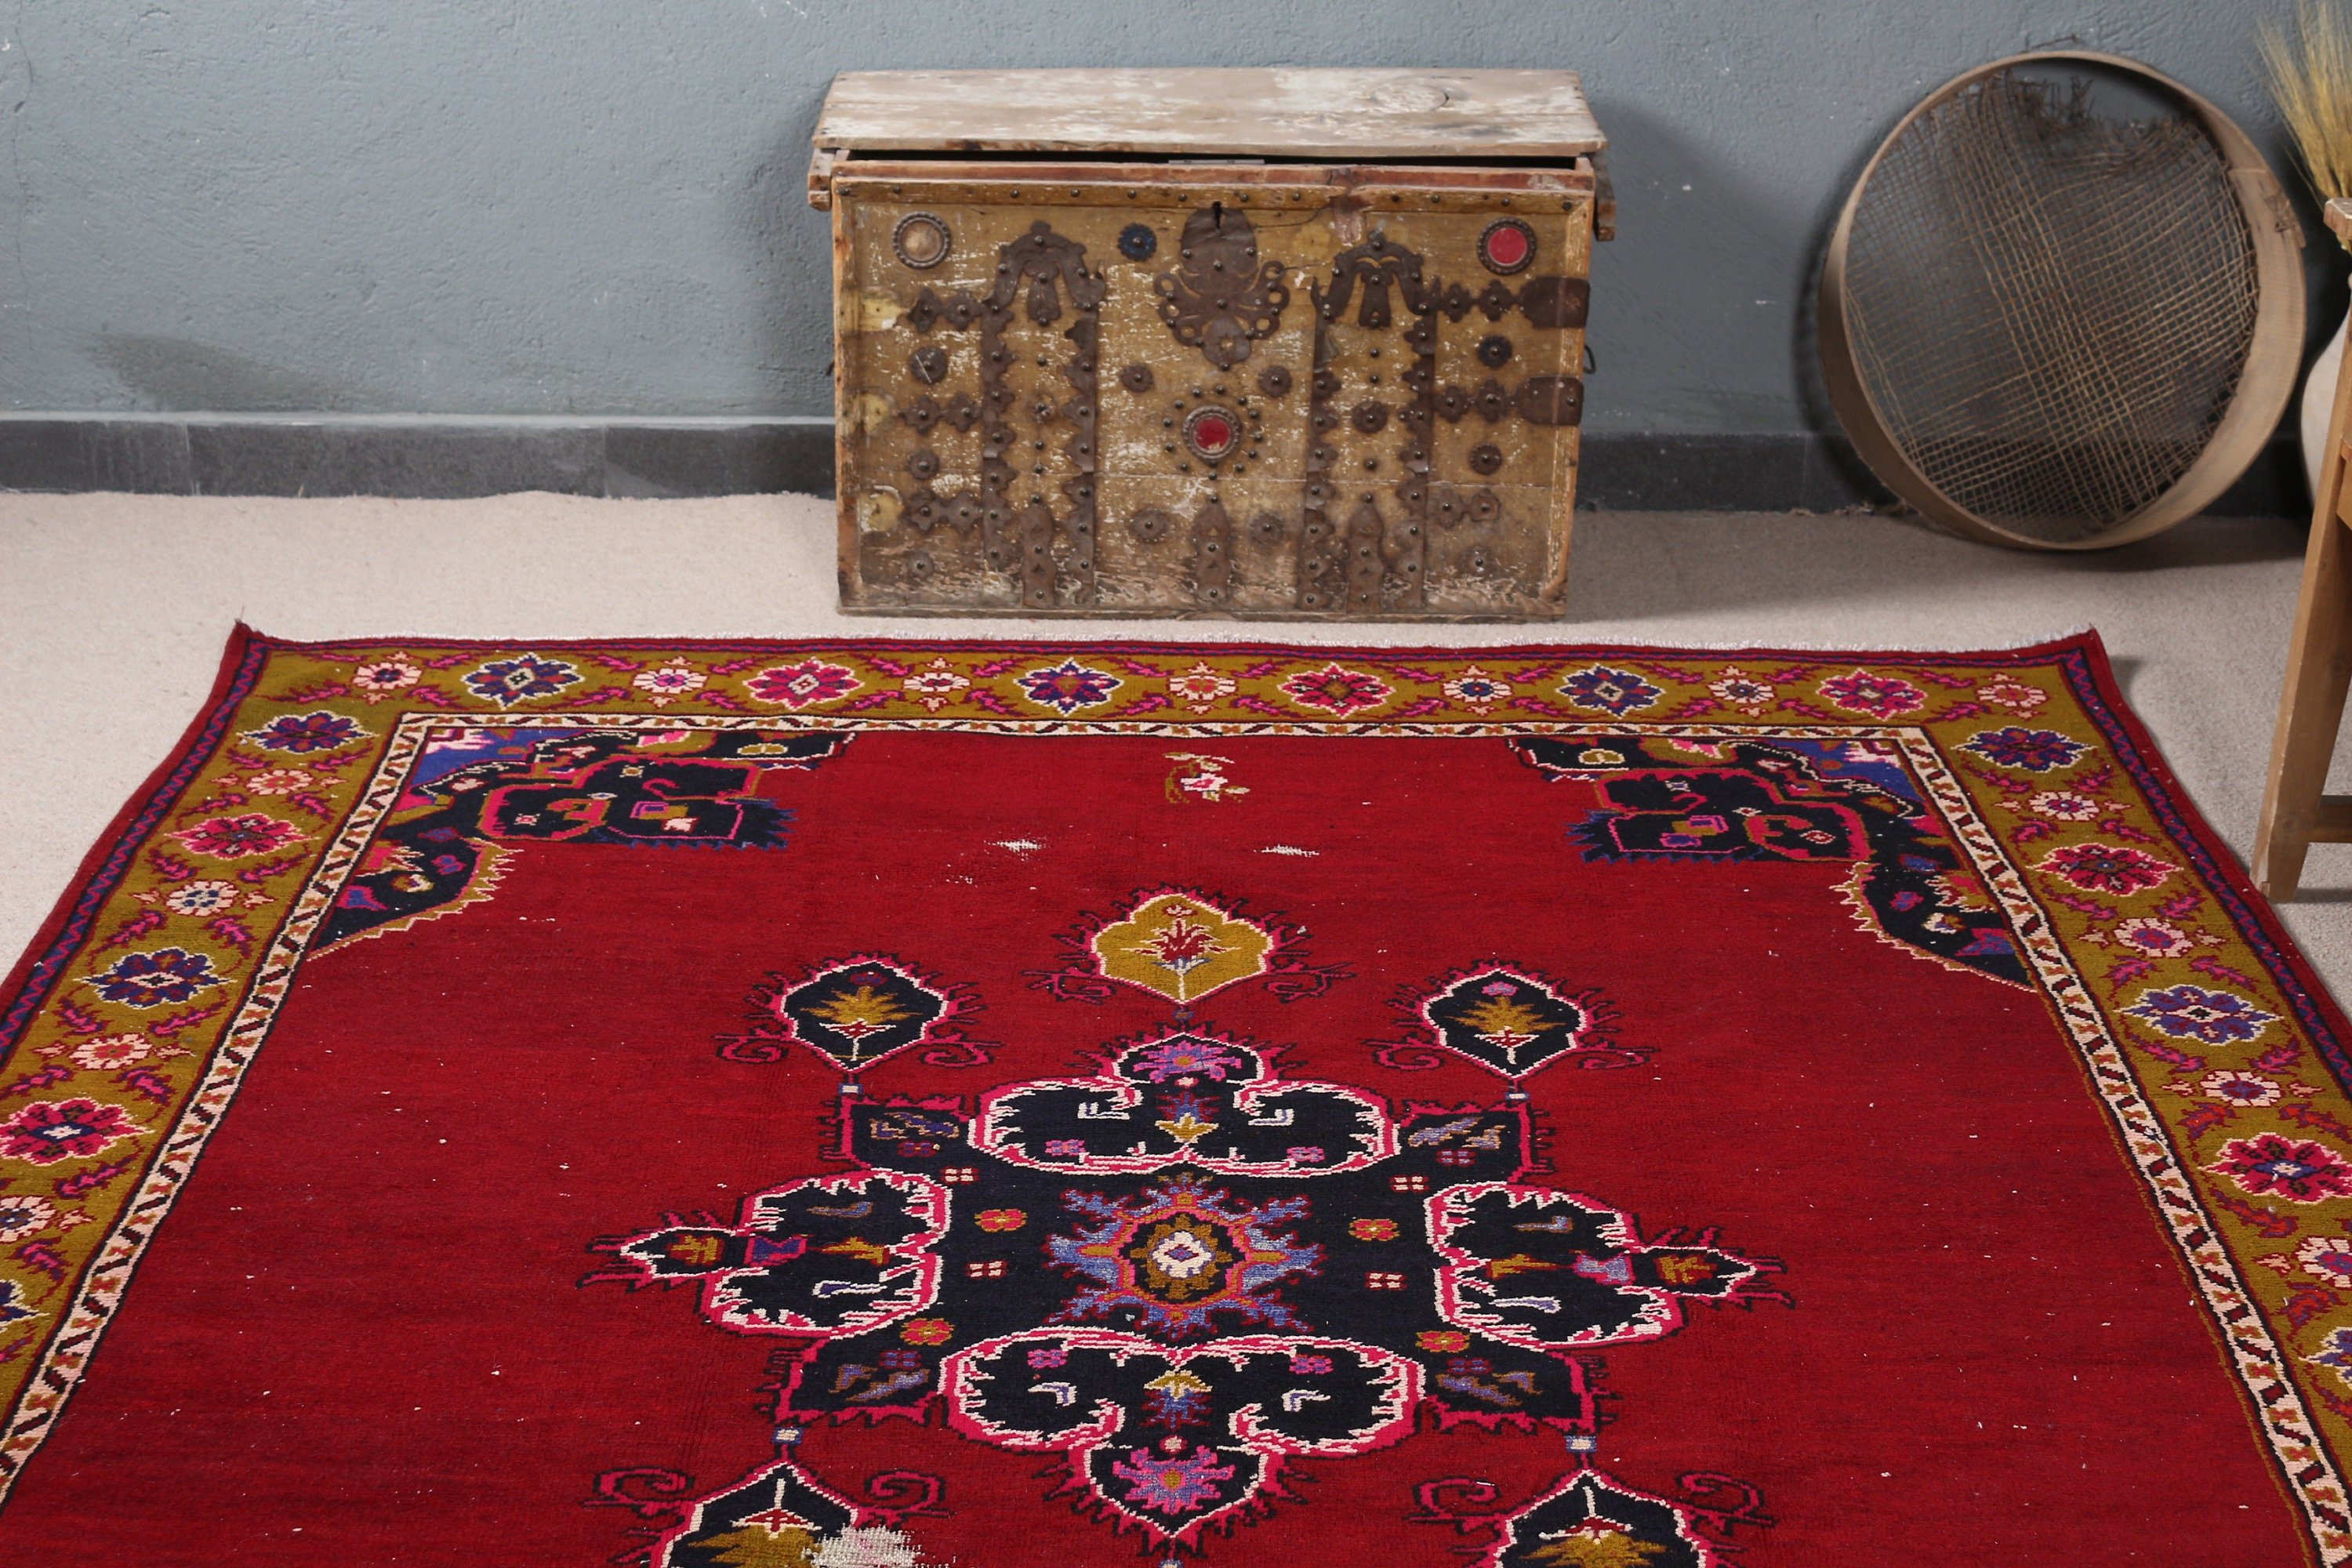 Cool Rugs, Turkish Rug, Rugs for Dining Room, Bedroom Rugs, Salon Rug, Vintage Rugs, Red  6.5x8 ft Large Rug